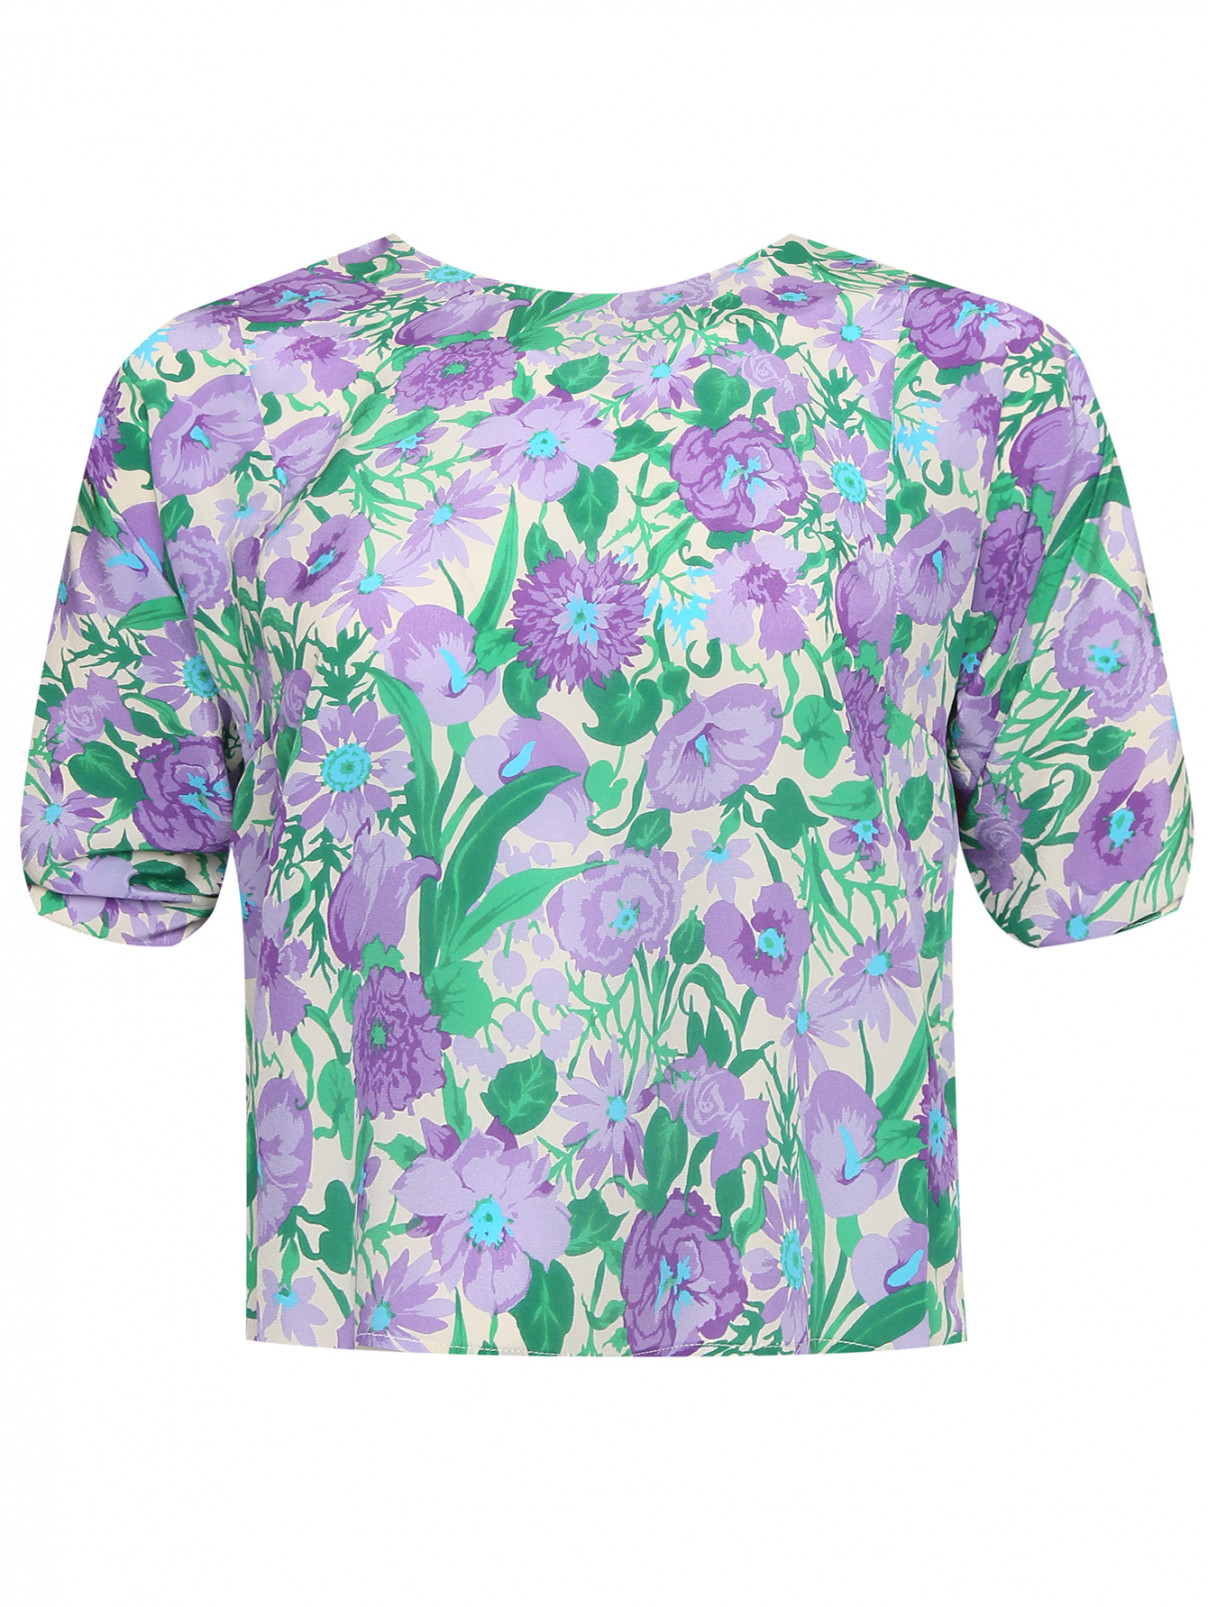 Блуза из шелка с узором Weekend Max Mara  –  Общий вид  – Цвет:  Мультиколор